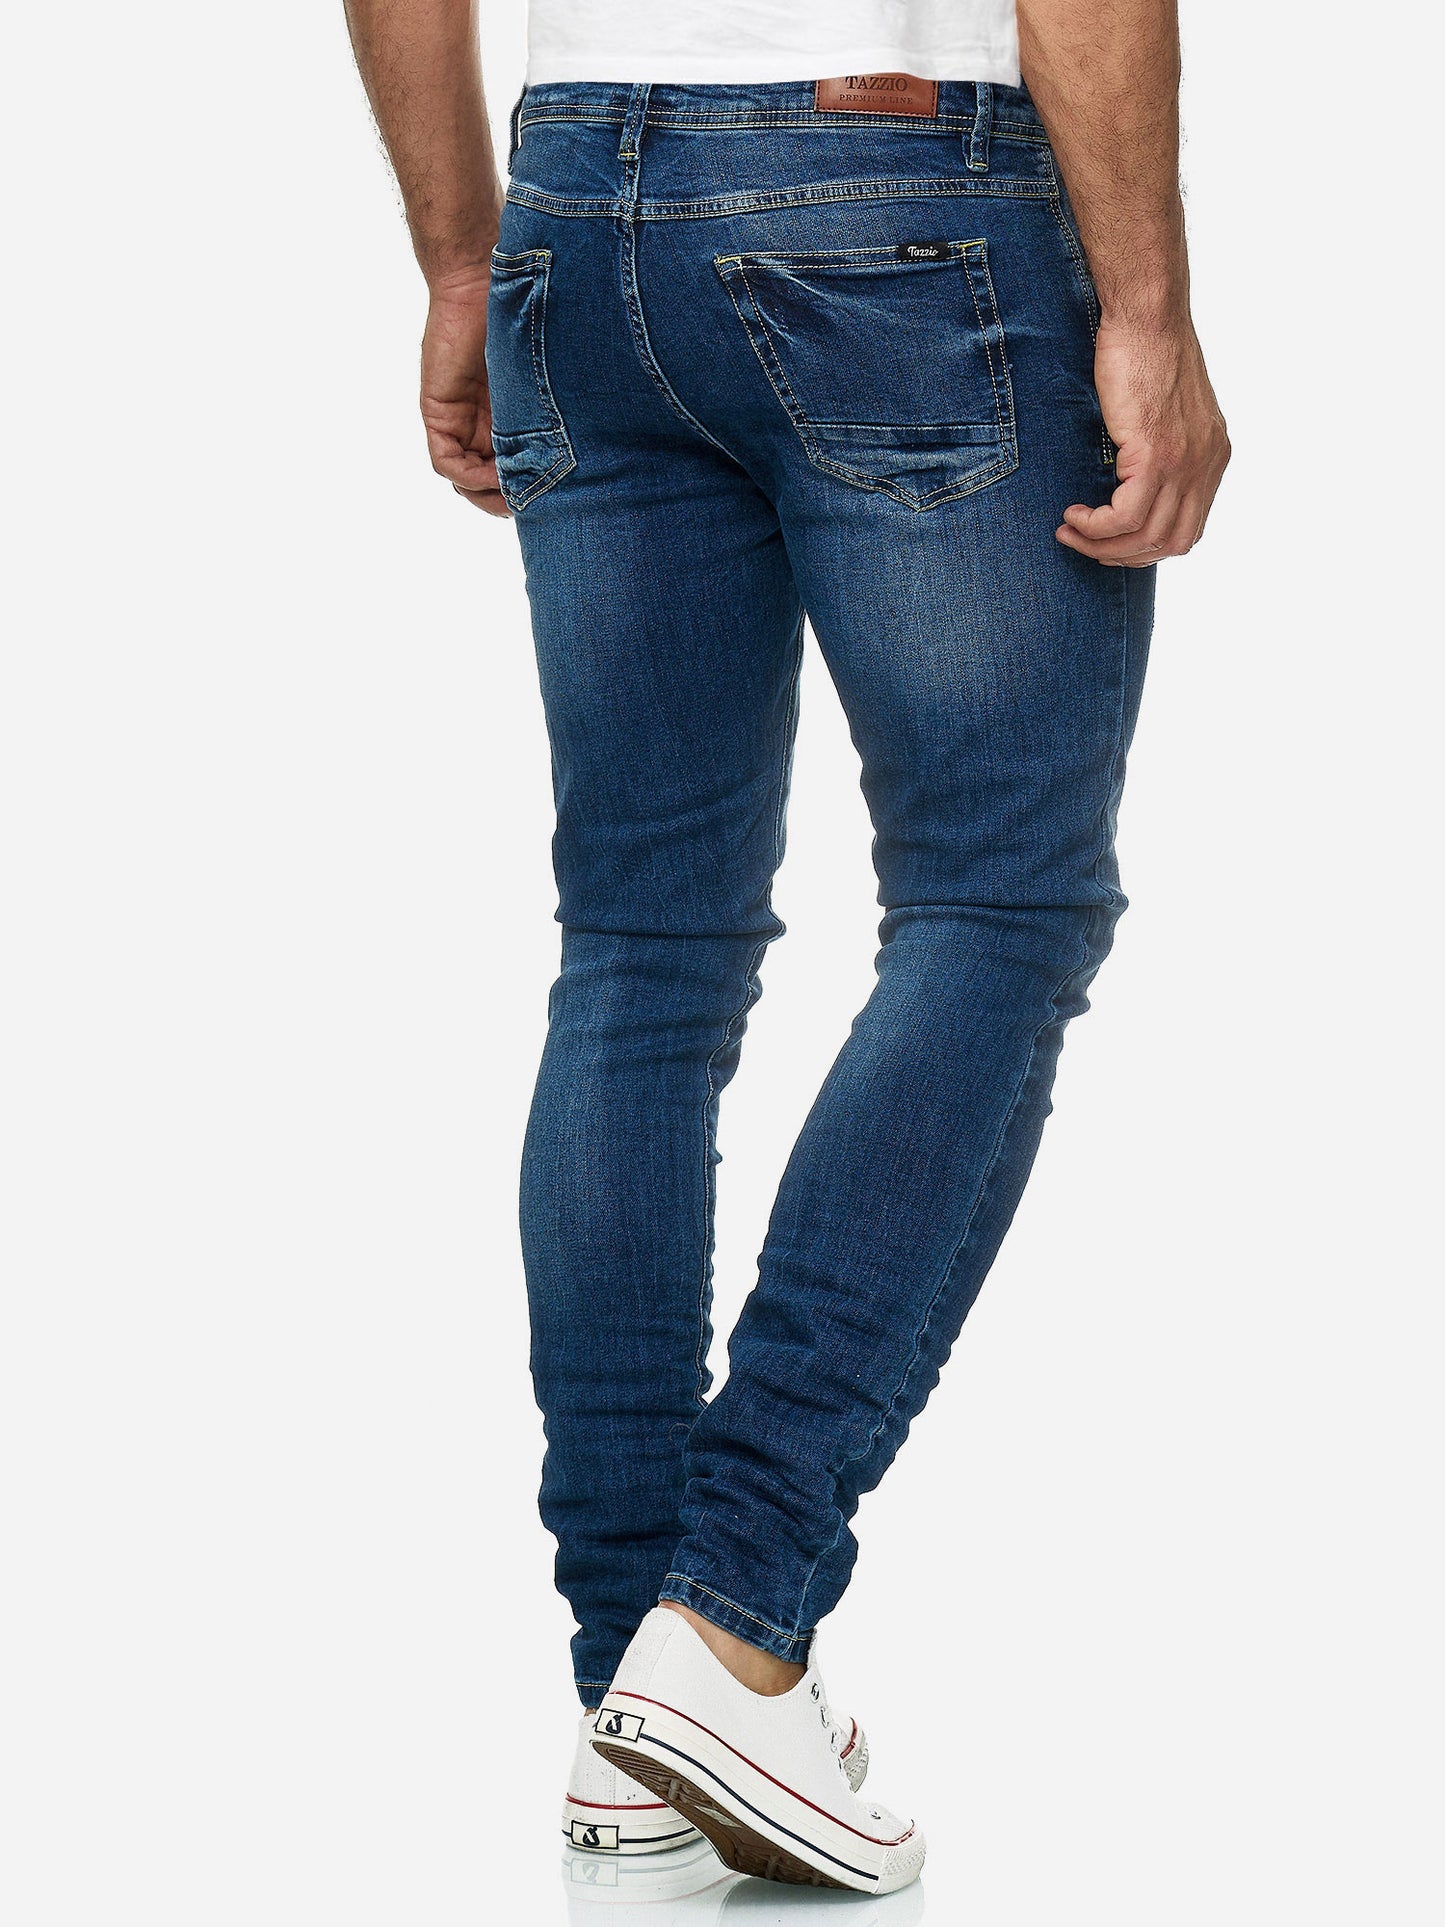 Tazzio Herren Jeans Skinny Fit 19534